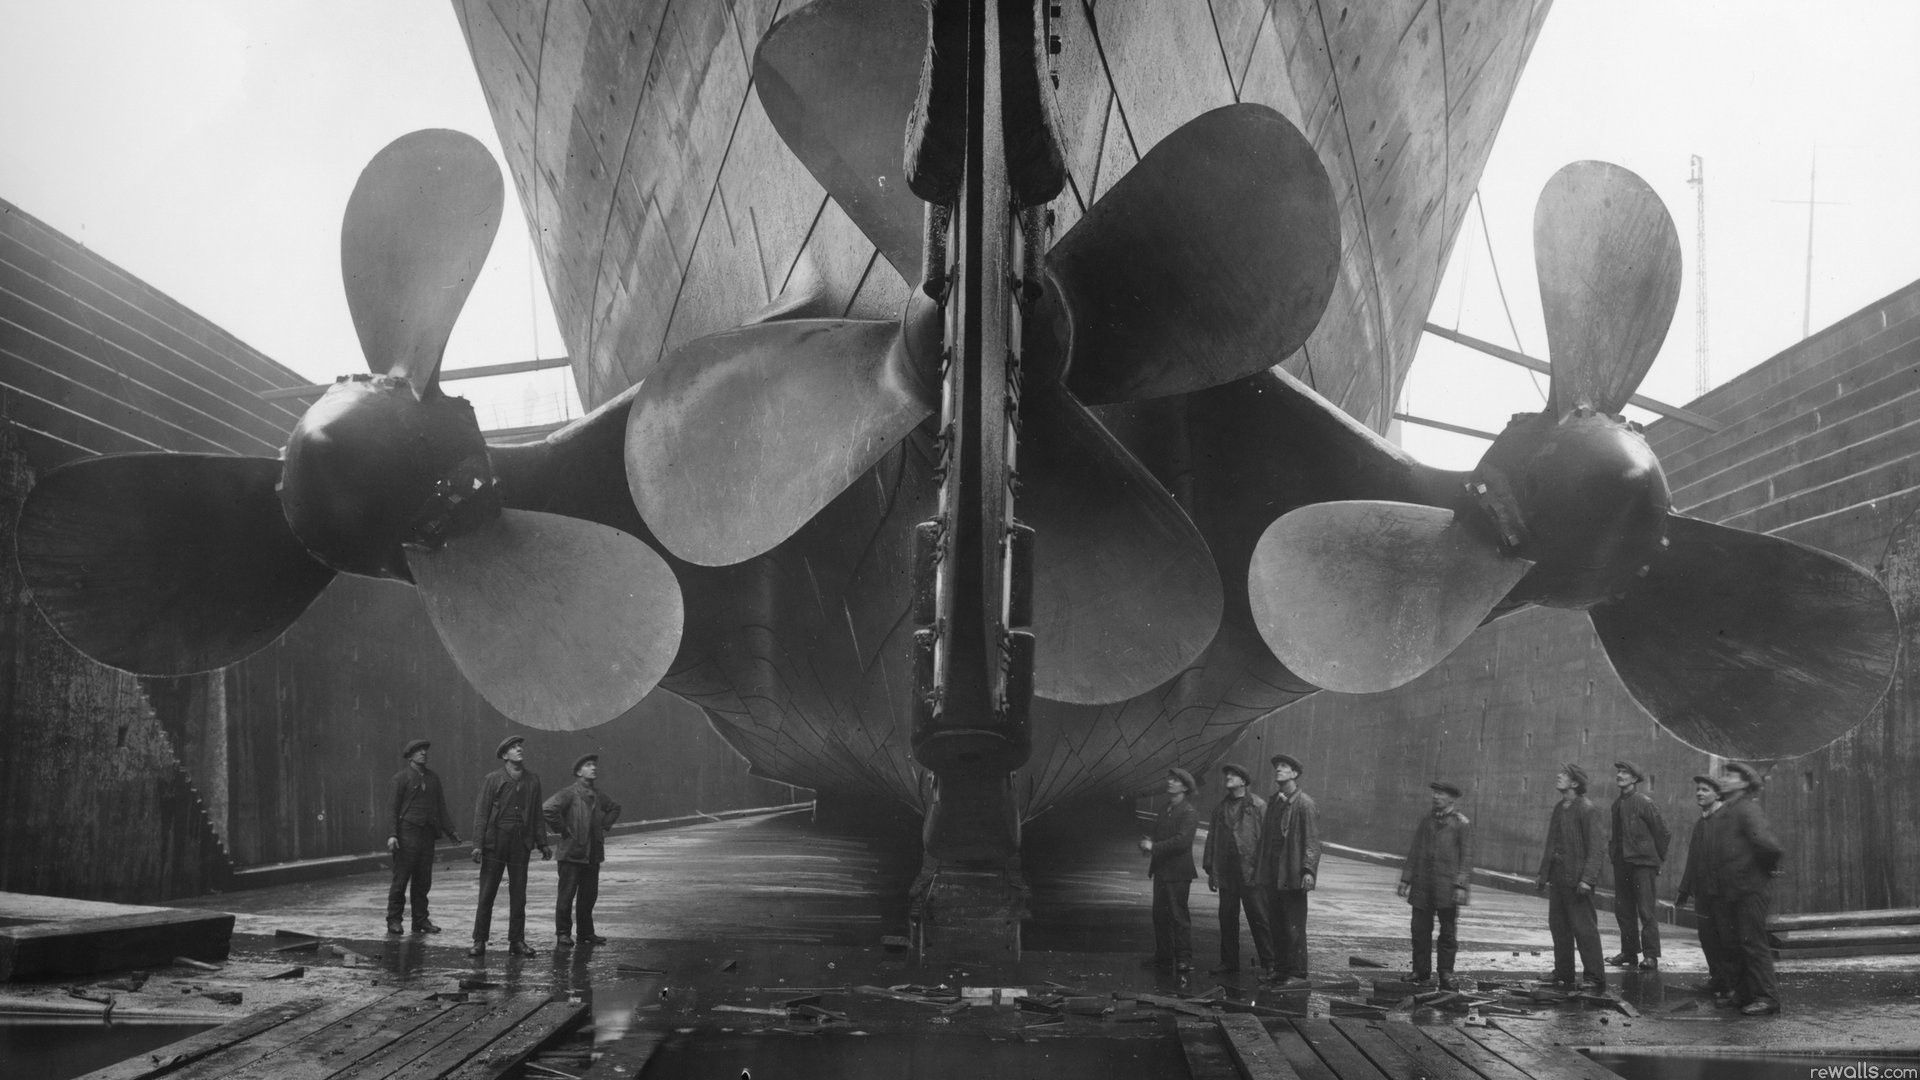 General 1920x1080 ship working monochrome vintage vehicle workers people Northern Ireland Belfast propeller